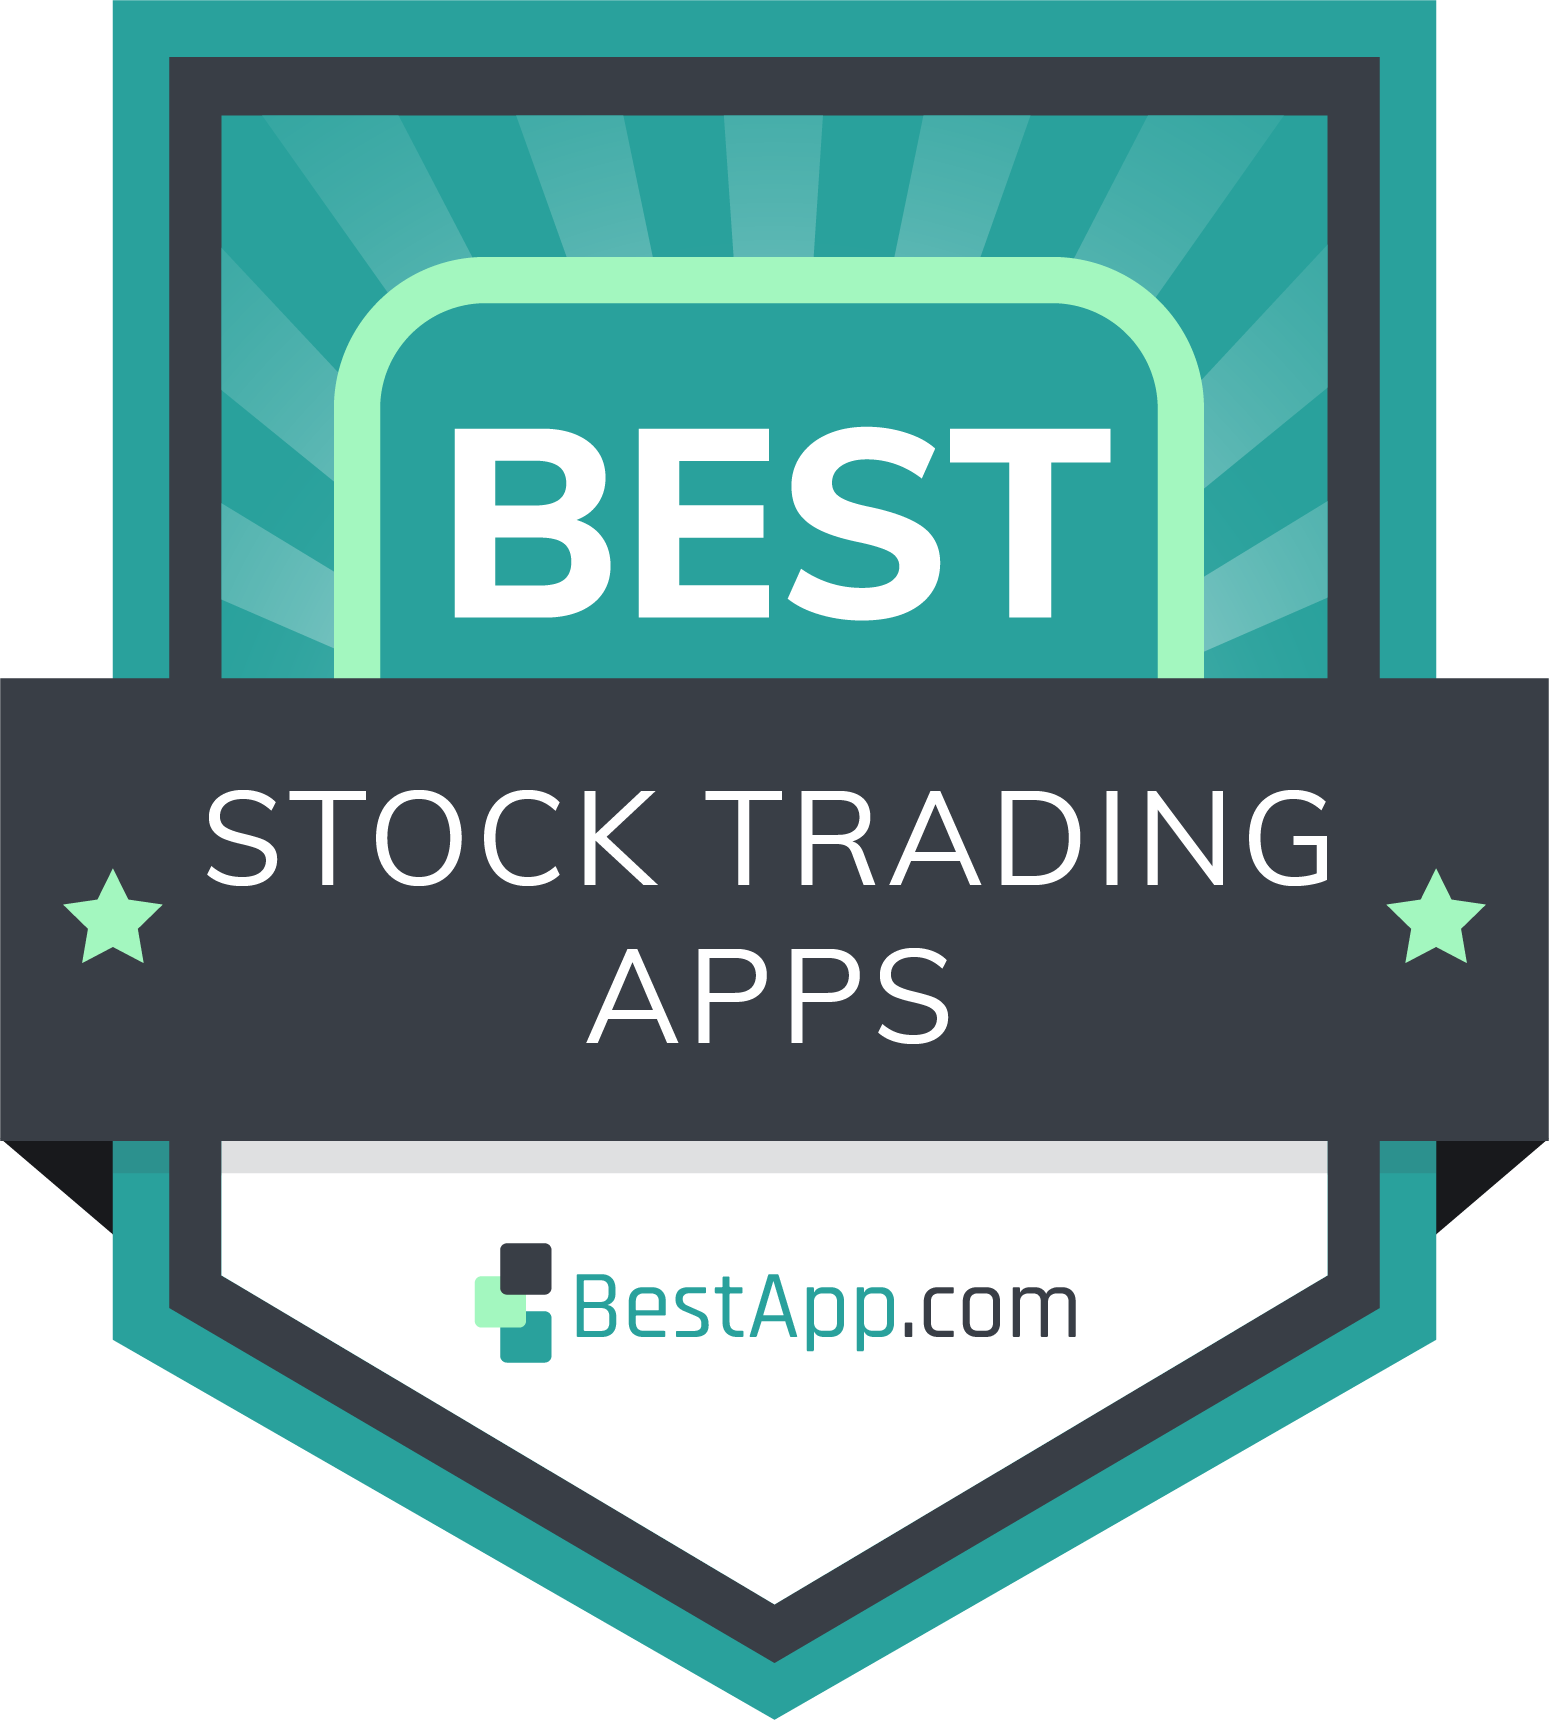 Best Stock Trading Apps Badge